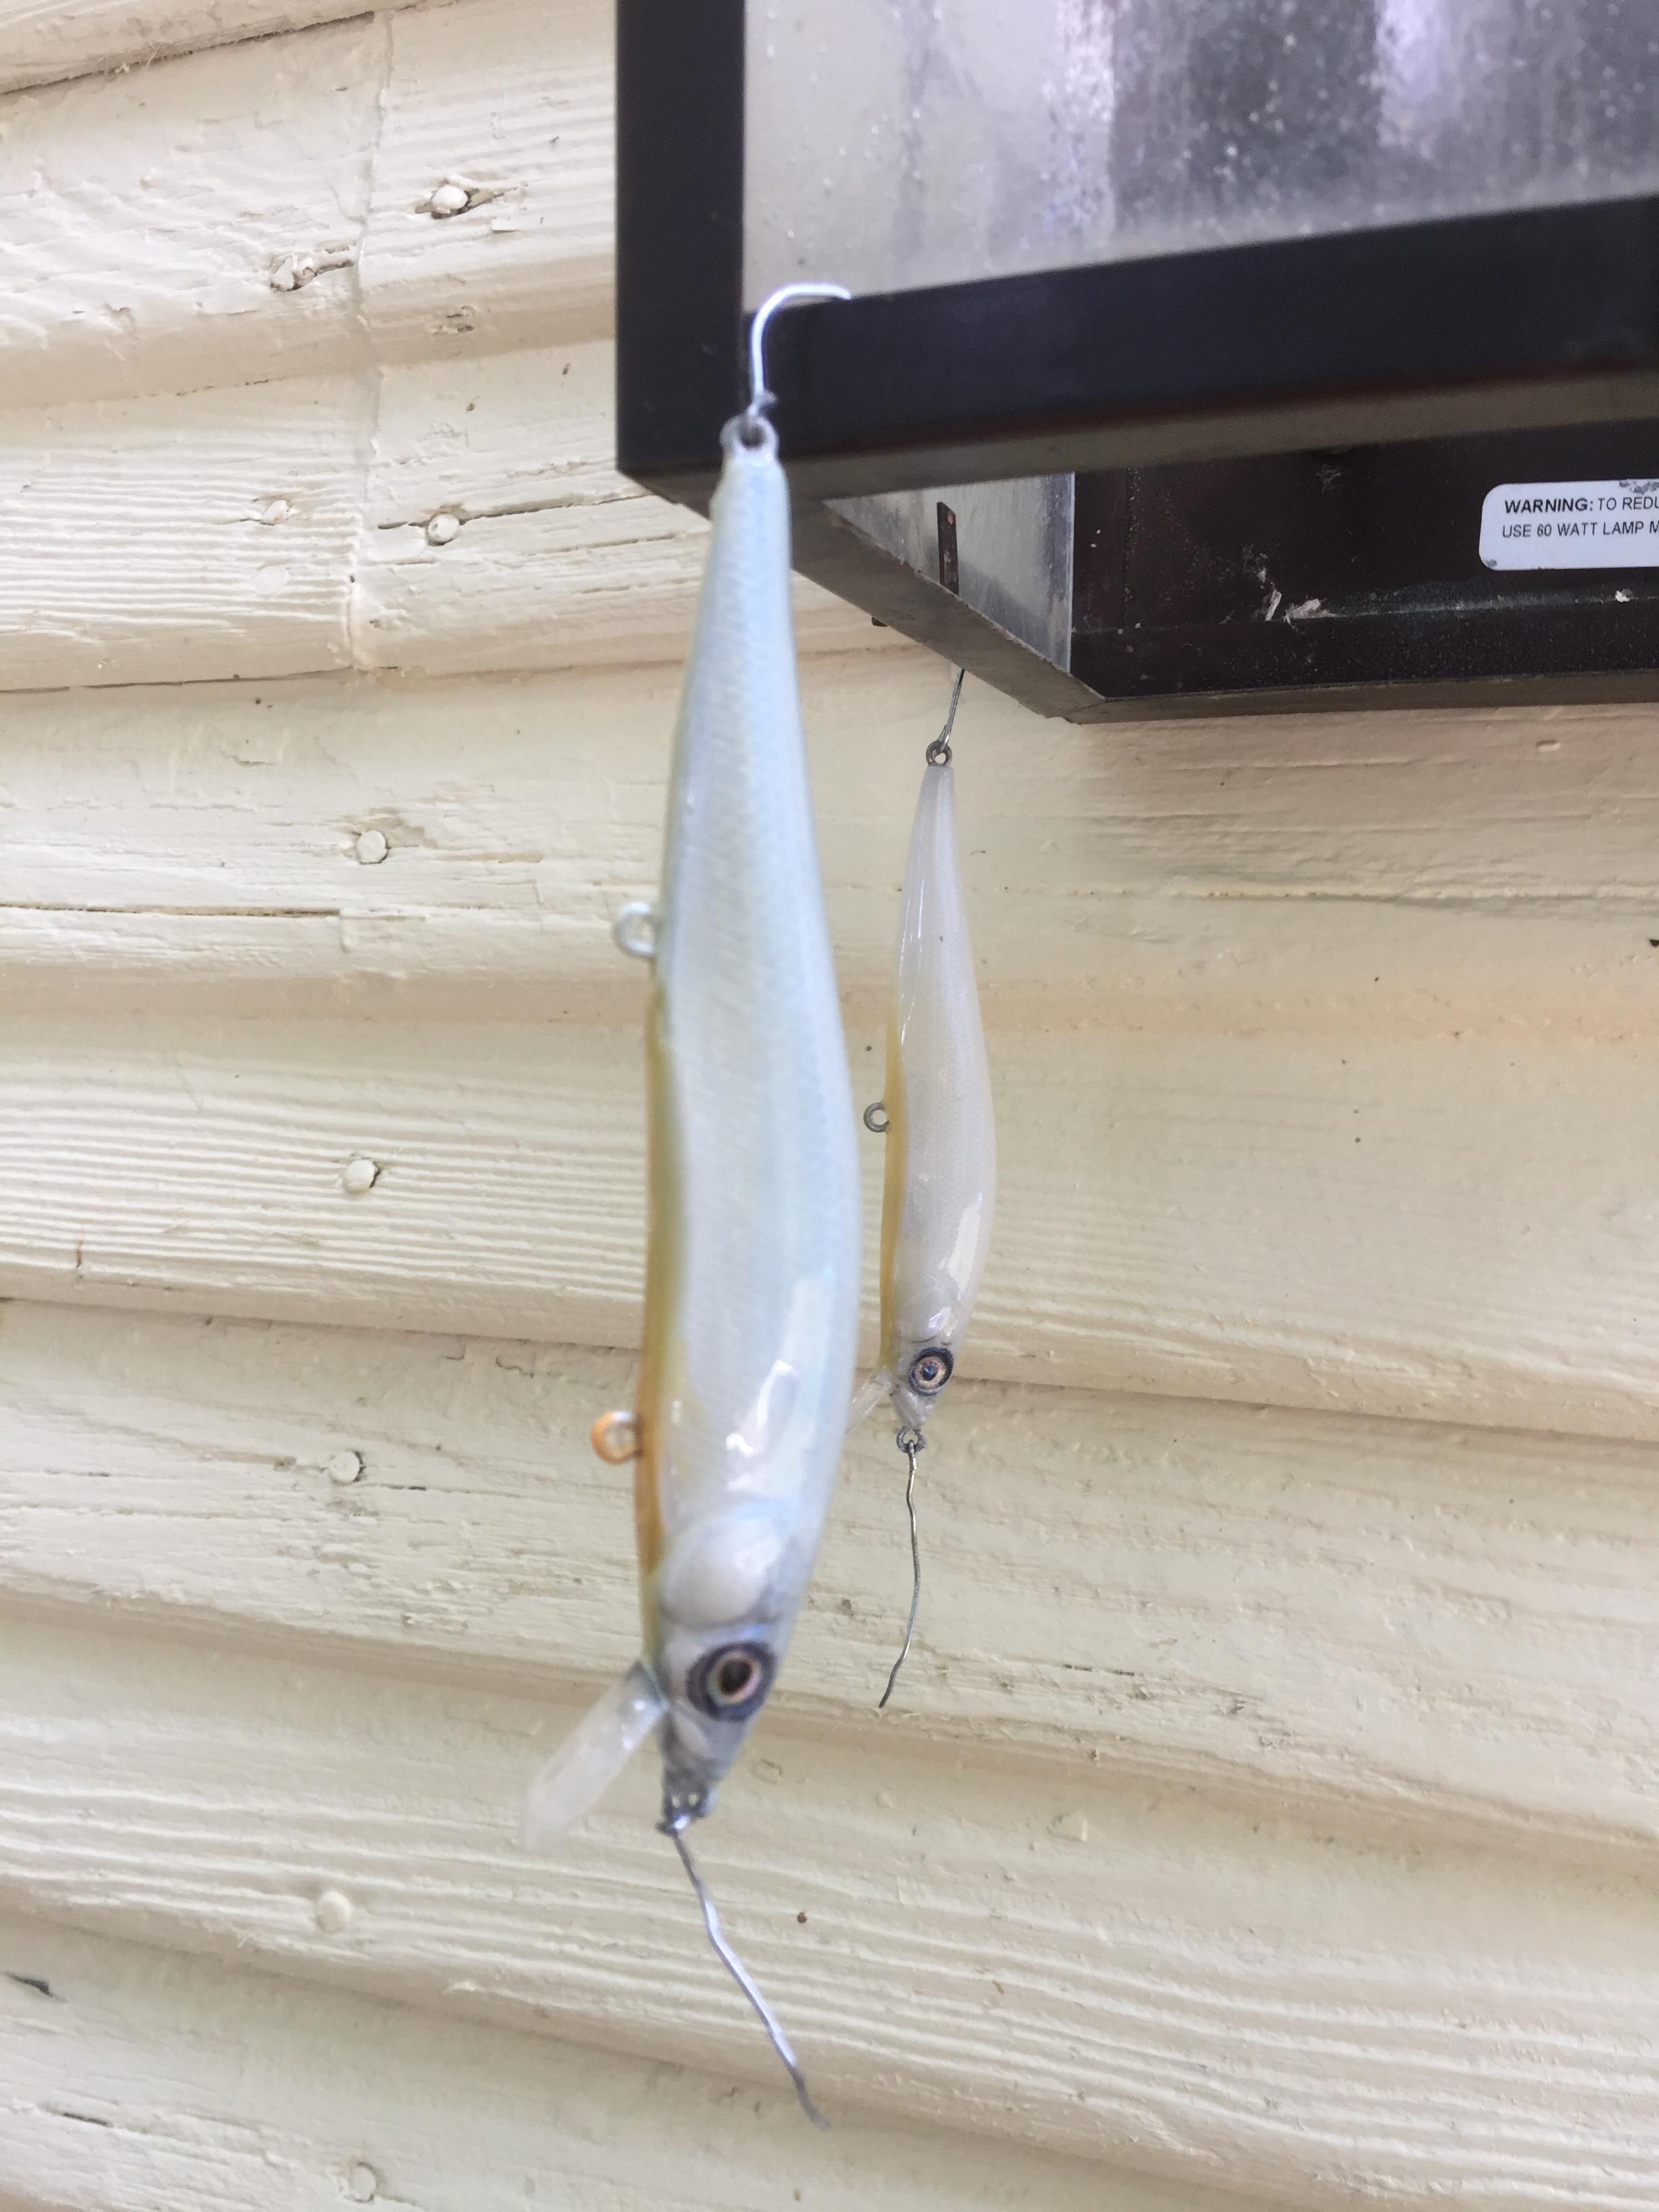 Painting jerkbaits for big trout - Lake Taneycomo - OzarkAnglers.Com Forum